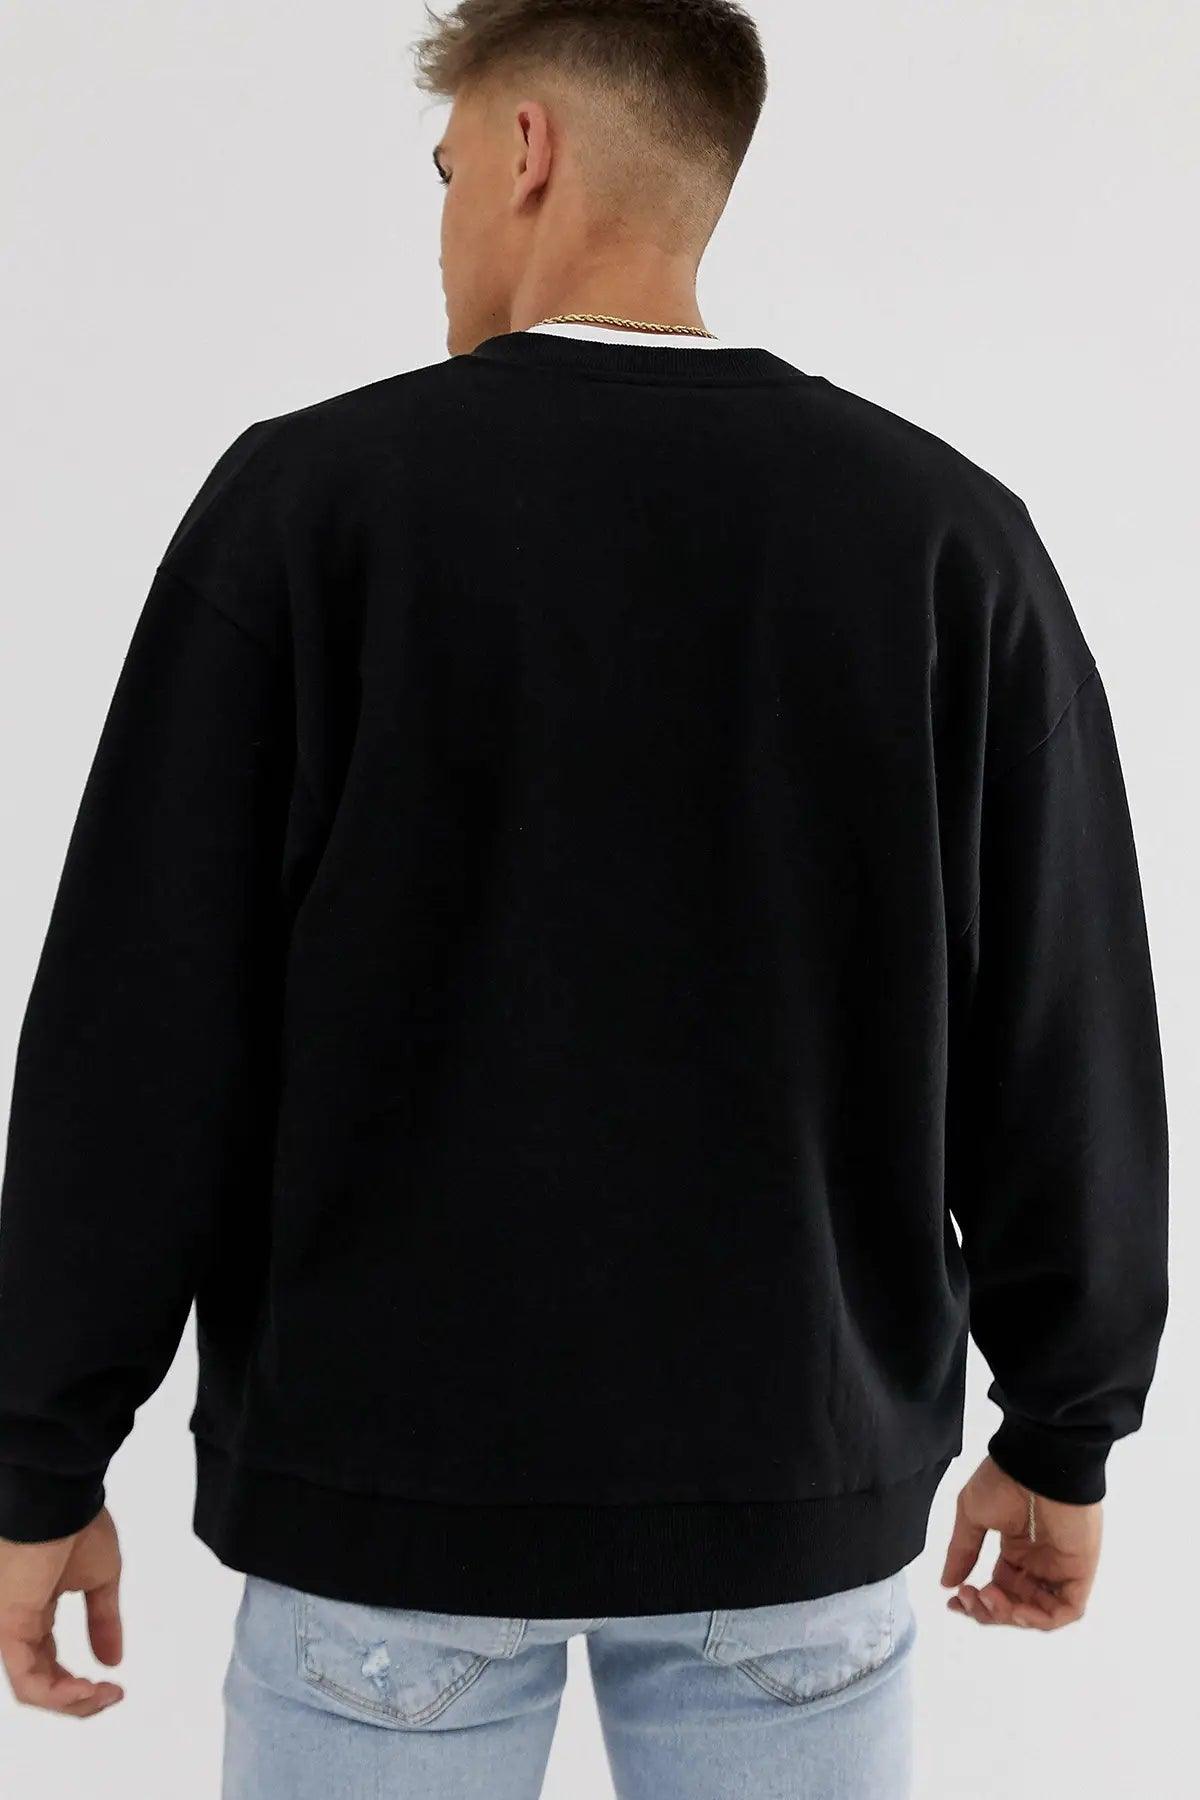 Heretic Oversize Erkek Sweatshirt - PΛSΛGE